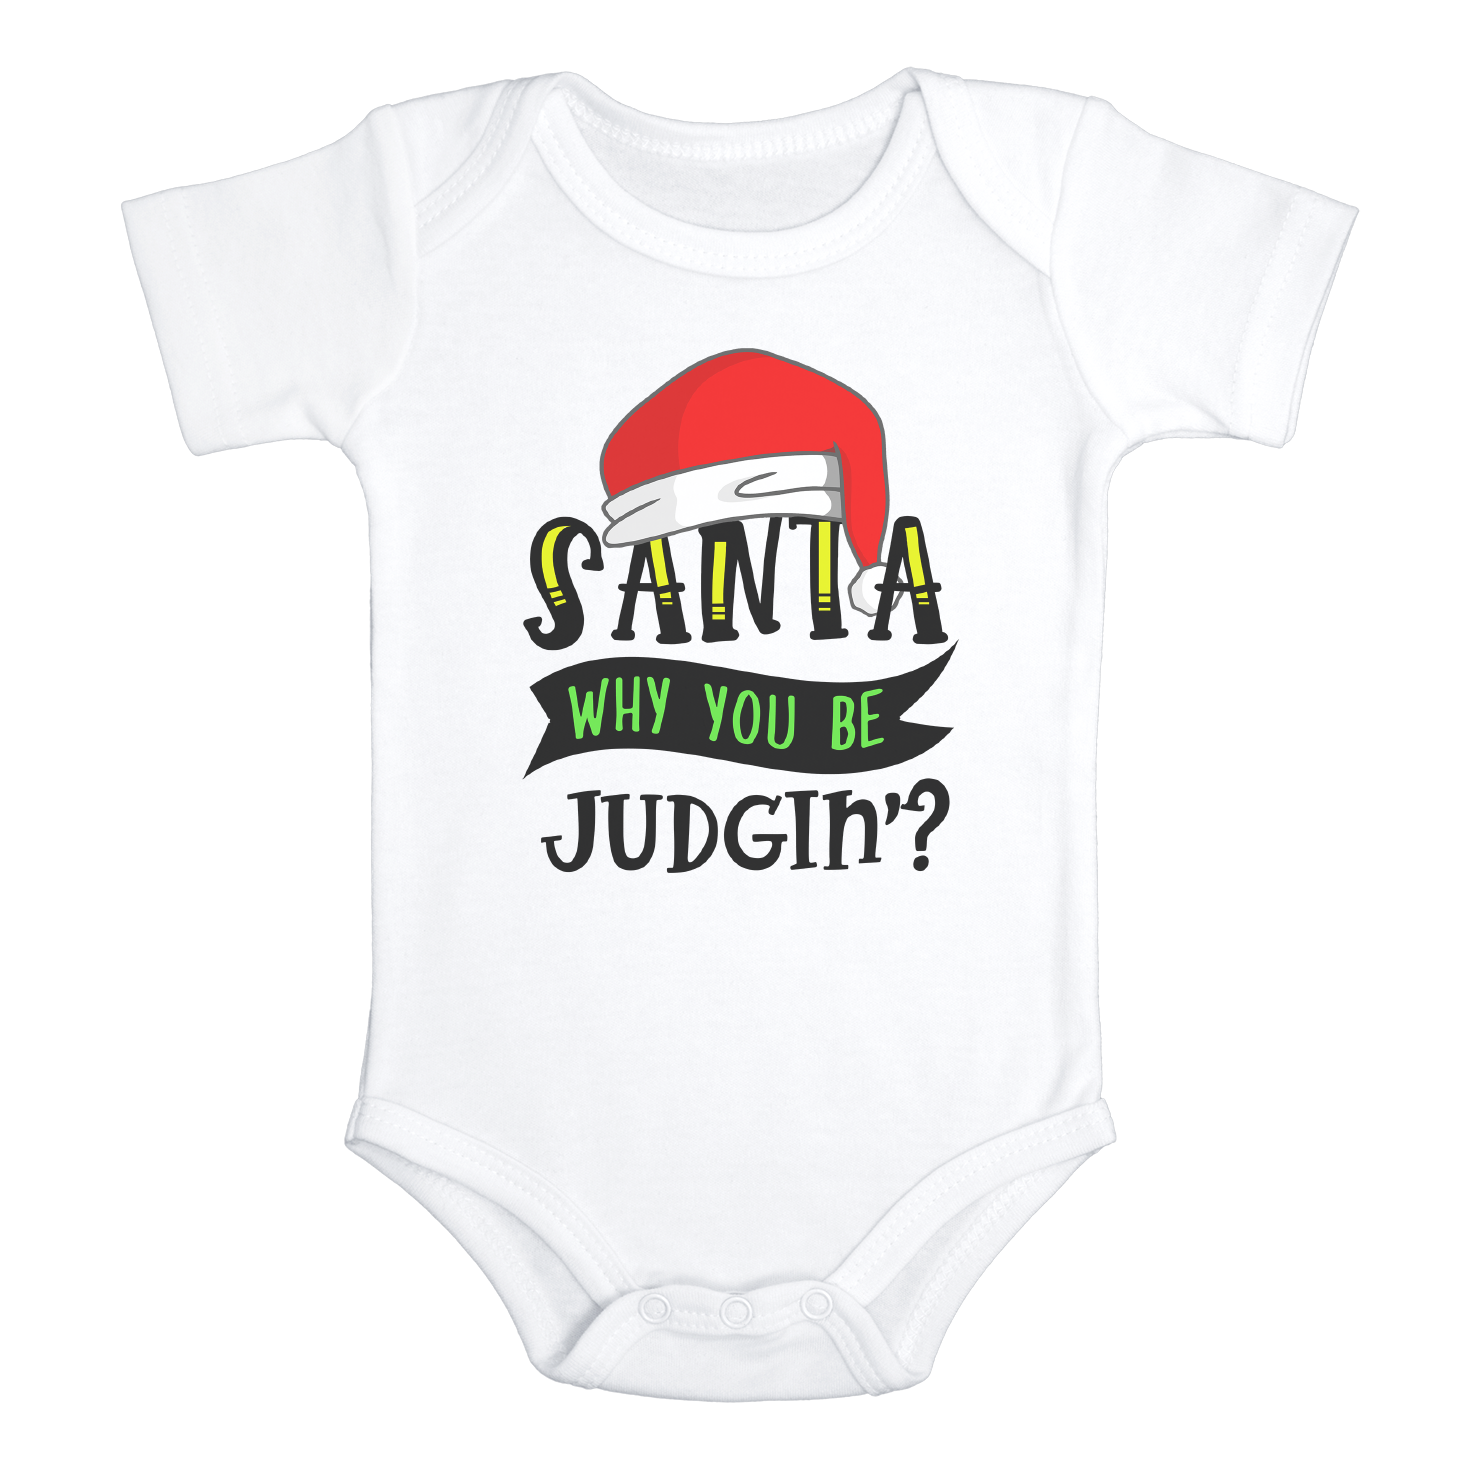 SANTA WHY YOU BE JUDGIN? Funny baby Christmas onesies bodysuit (white: short or long sleeve)